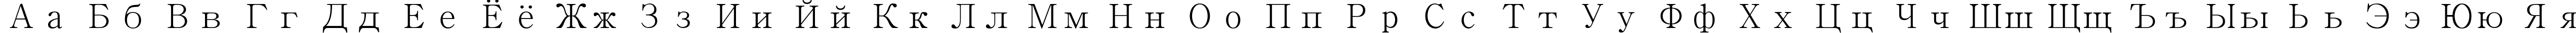 Пример написания русского алфавита шрифтом Adobe Myungjo Std M